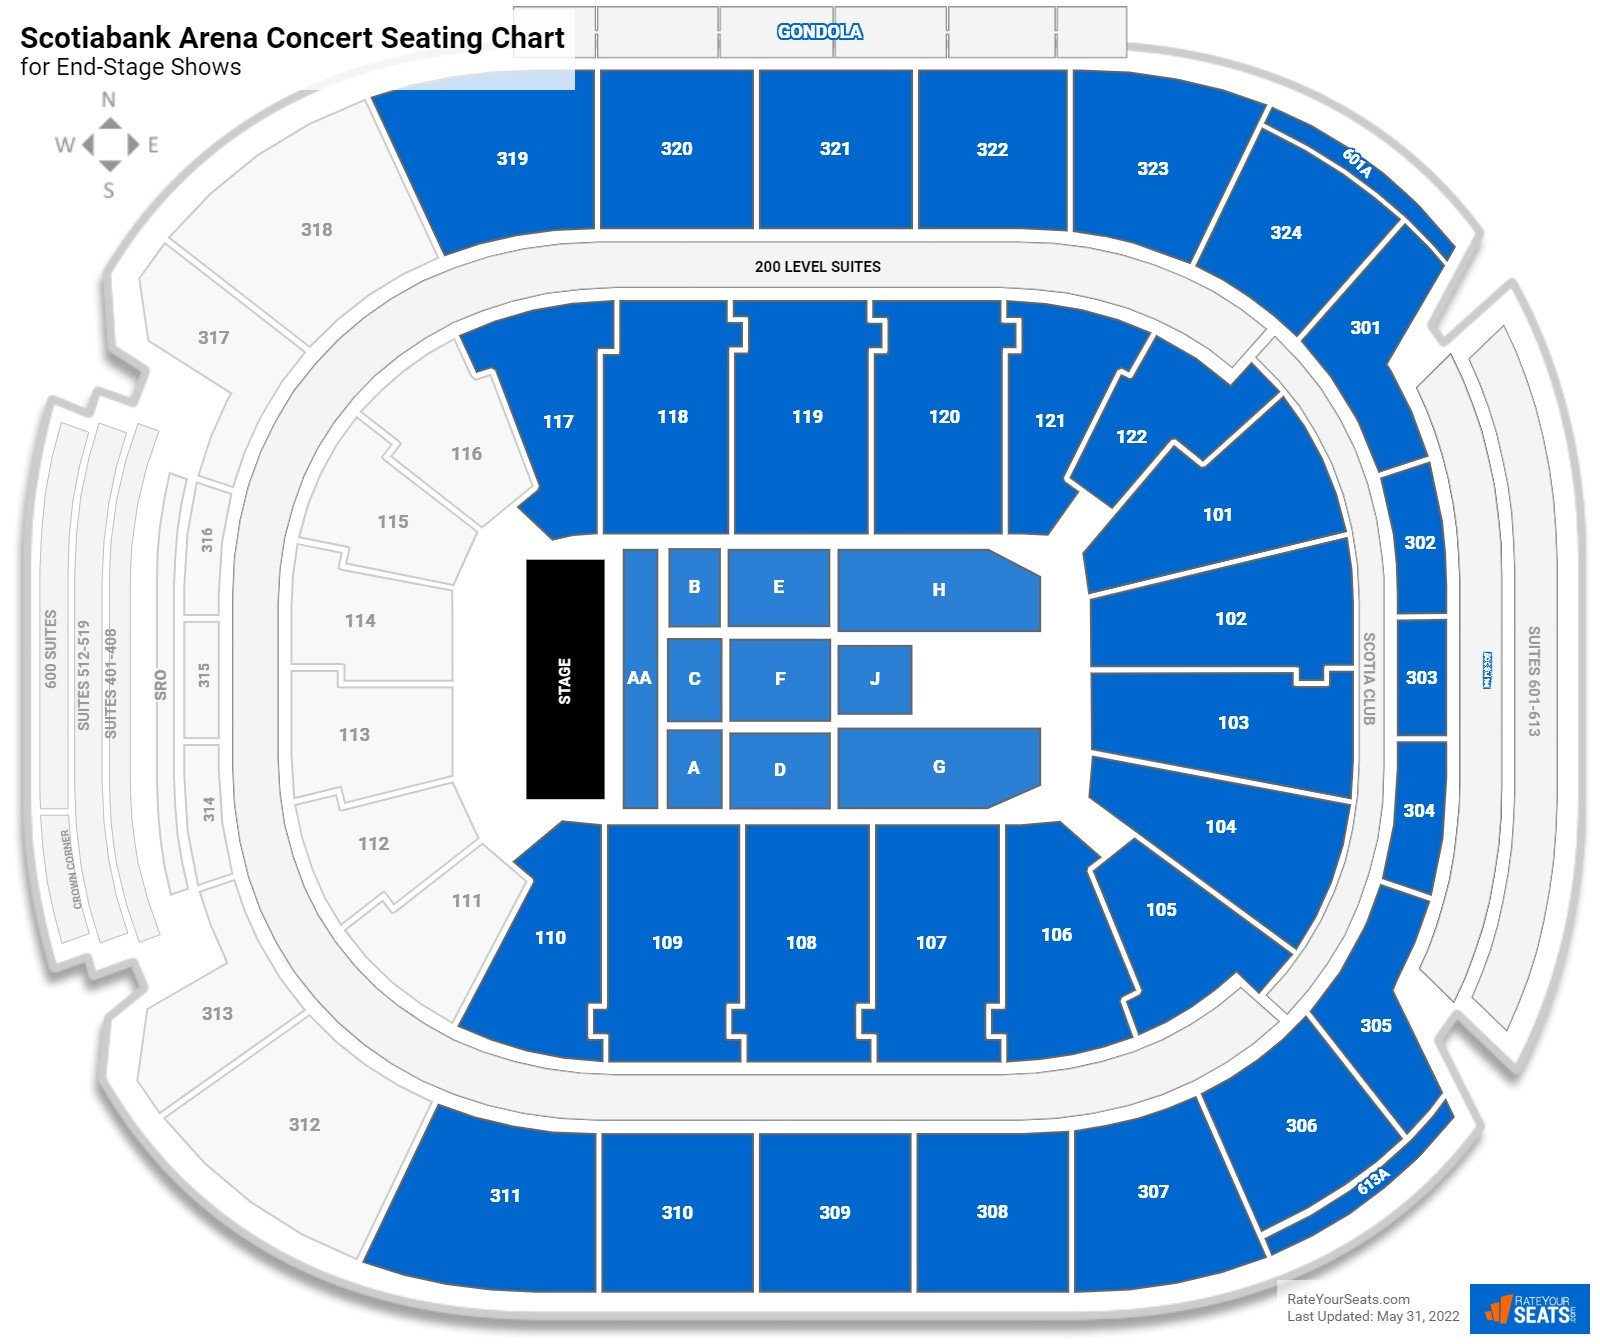 Scotiabank Arena Concert Seating Chart